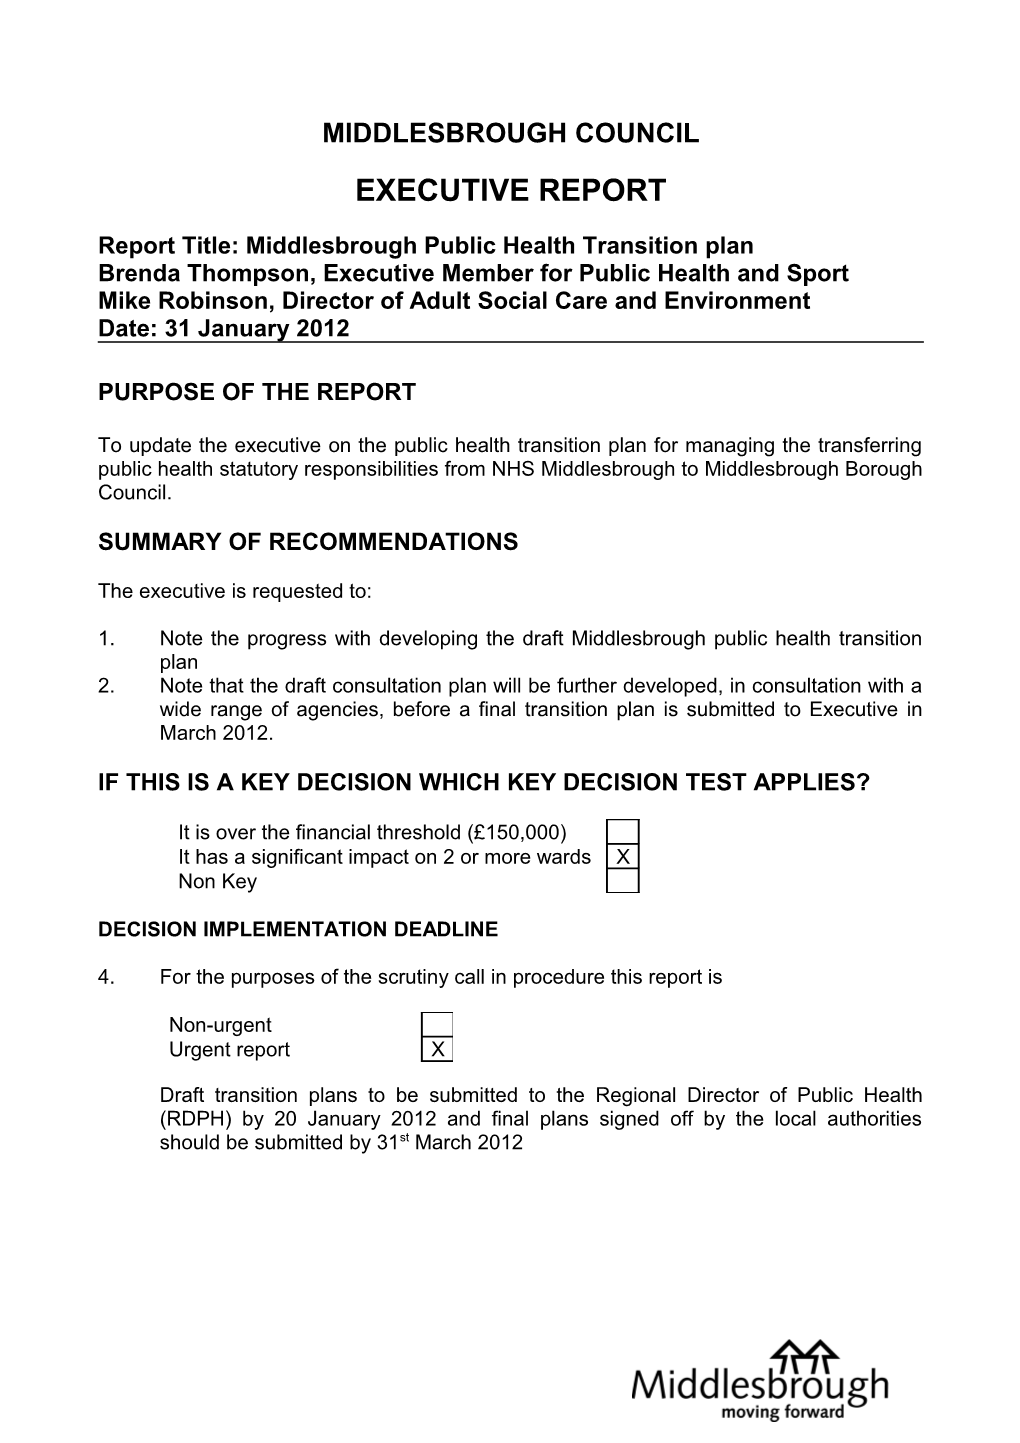 Report Title: Middlesbrough Public Health Transition Plan